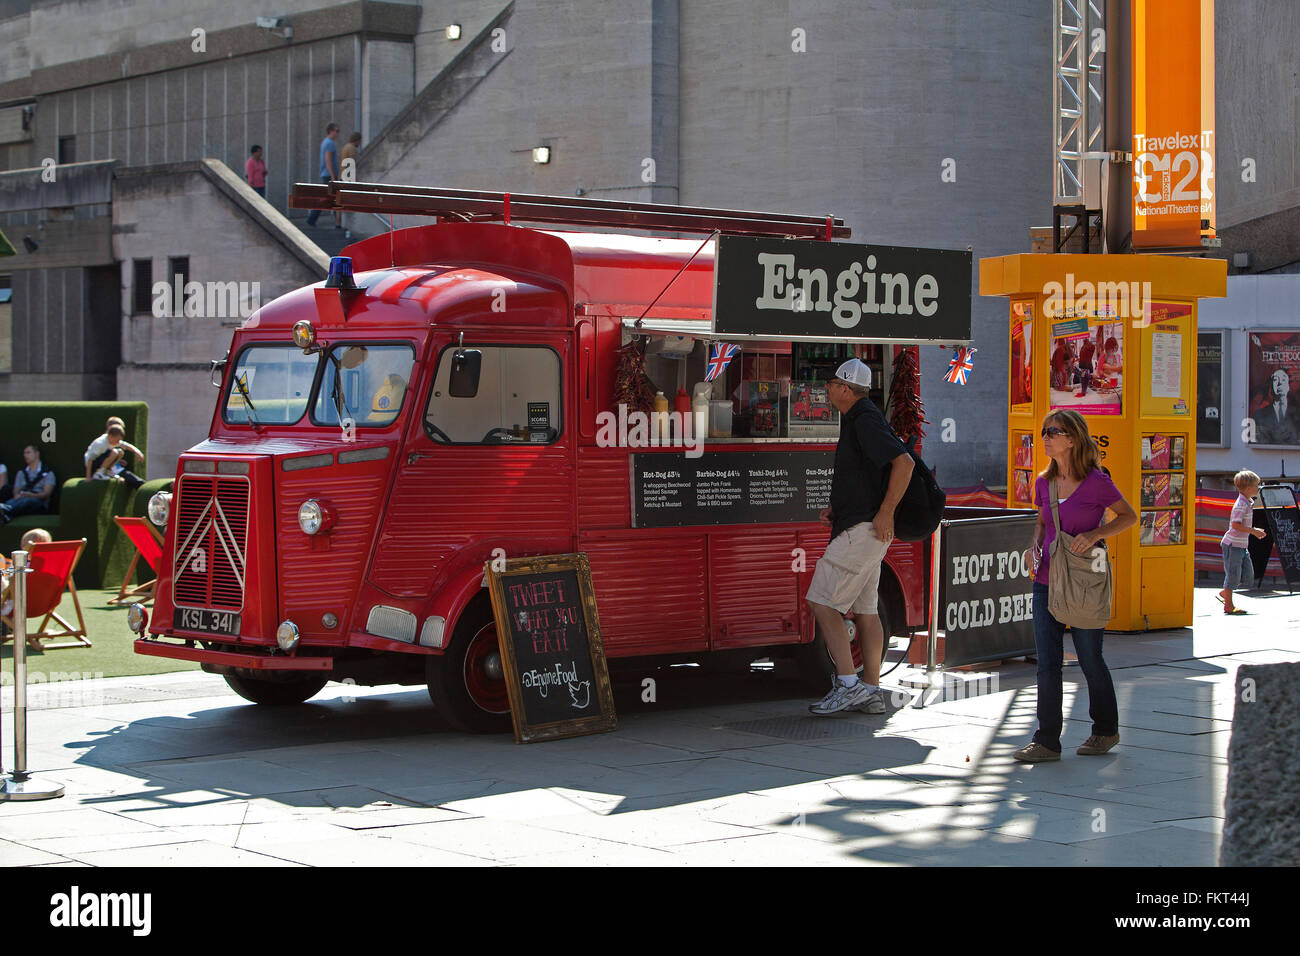 London street food vans: Engine,1959 Citroen H fire engine van converted into mobile stall Stock Photo - Alamy